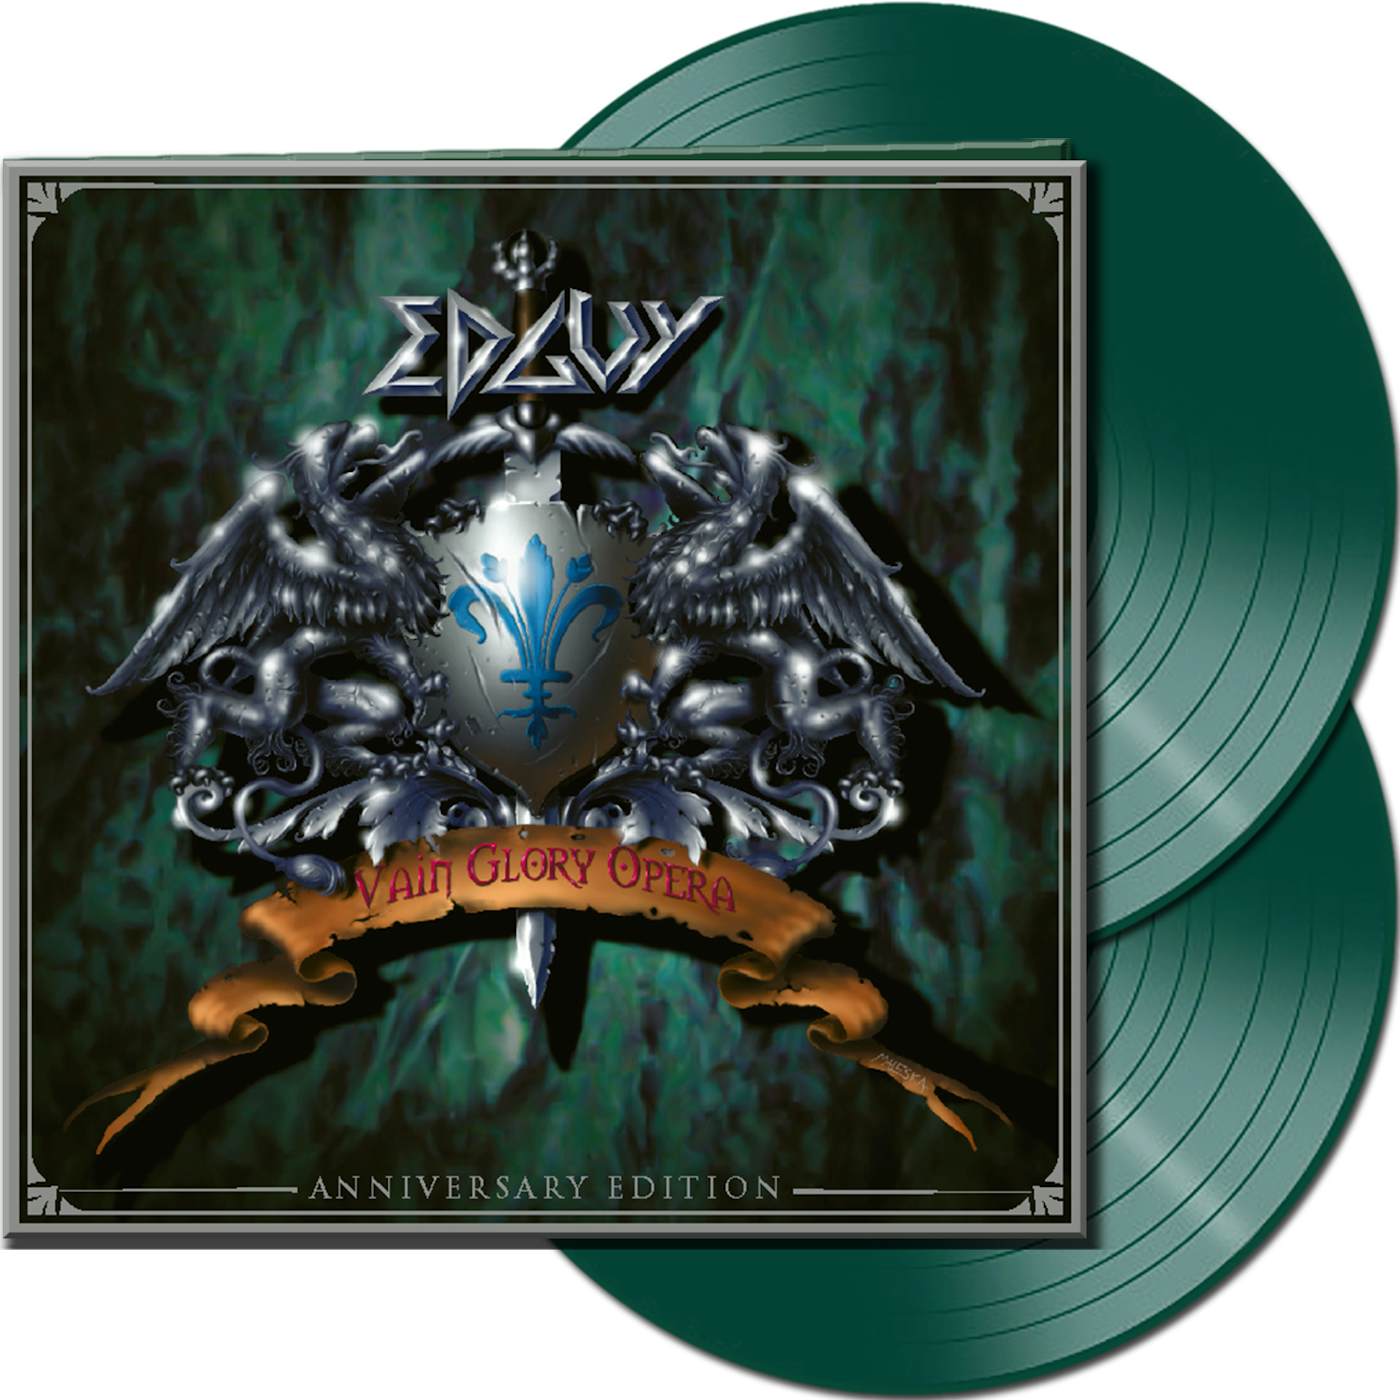 Edguy Vain Glory Opera (Anniversary Edition) Vinyl Record